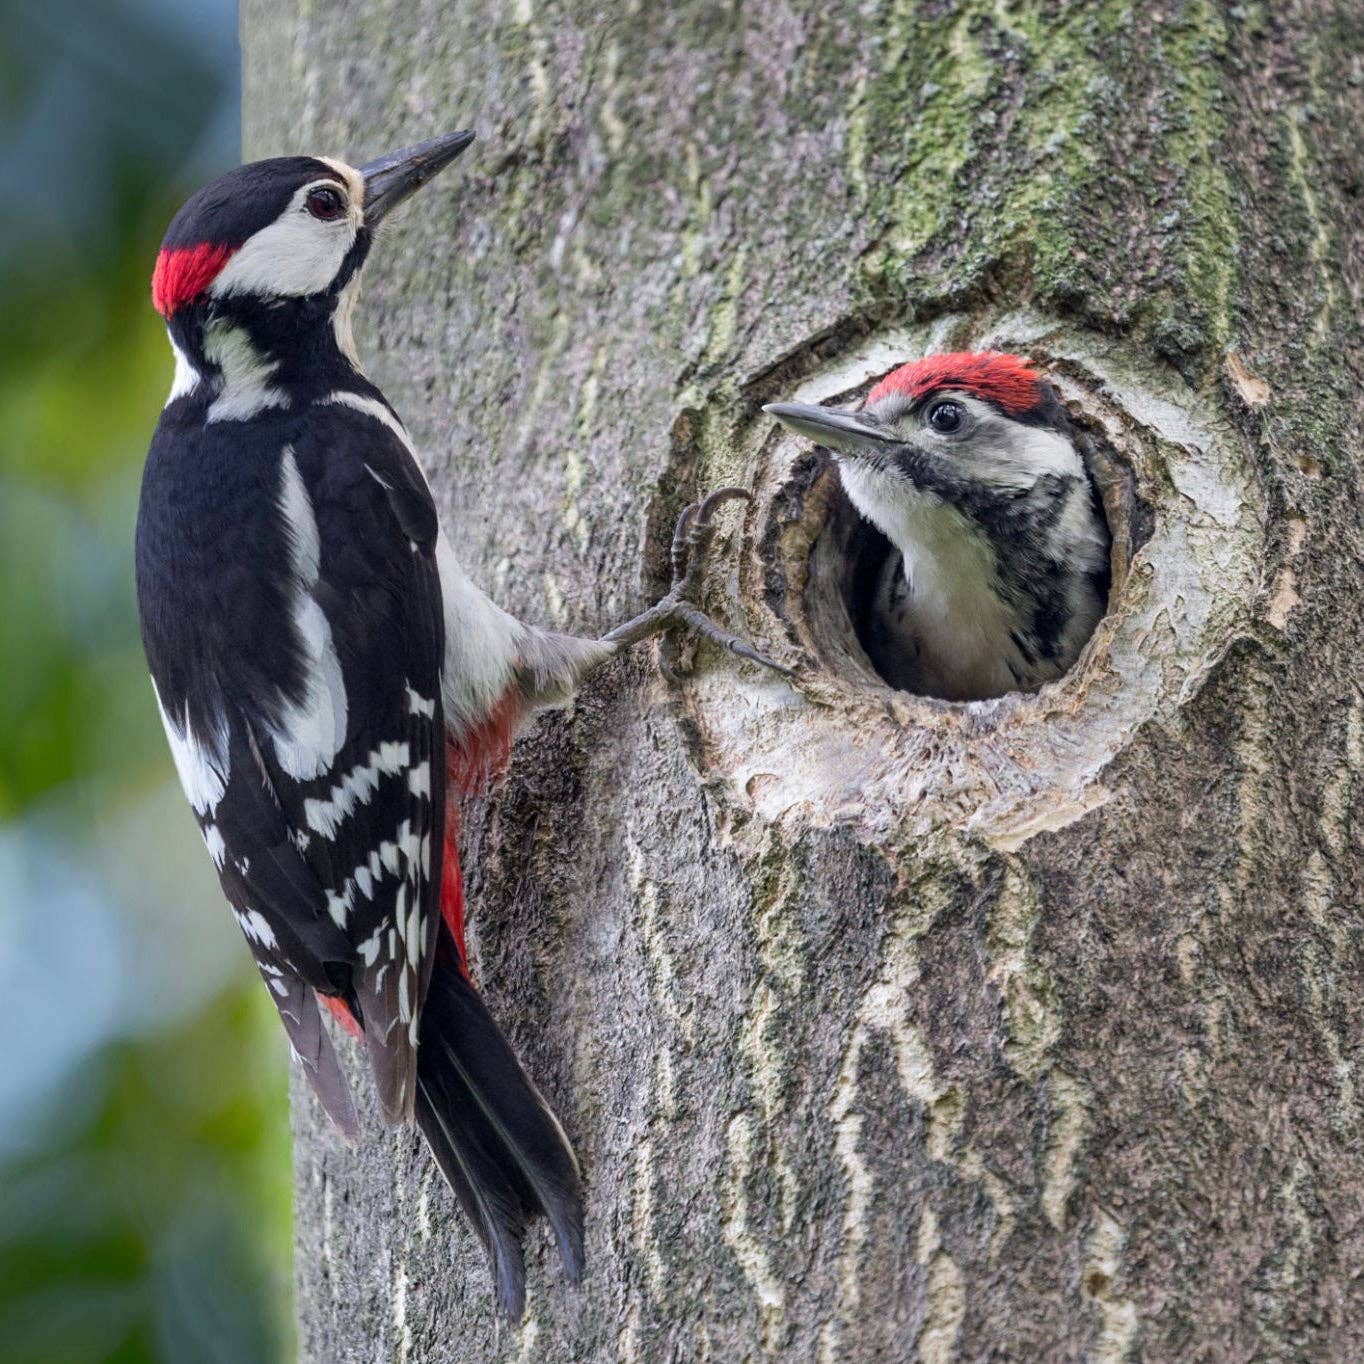 Felt Ornament - Woodpecker